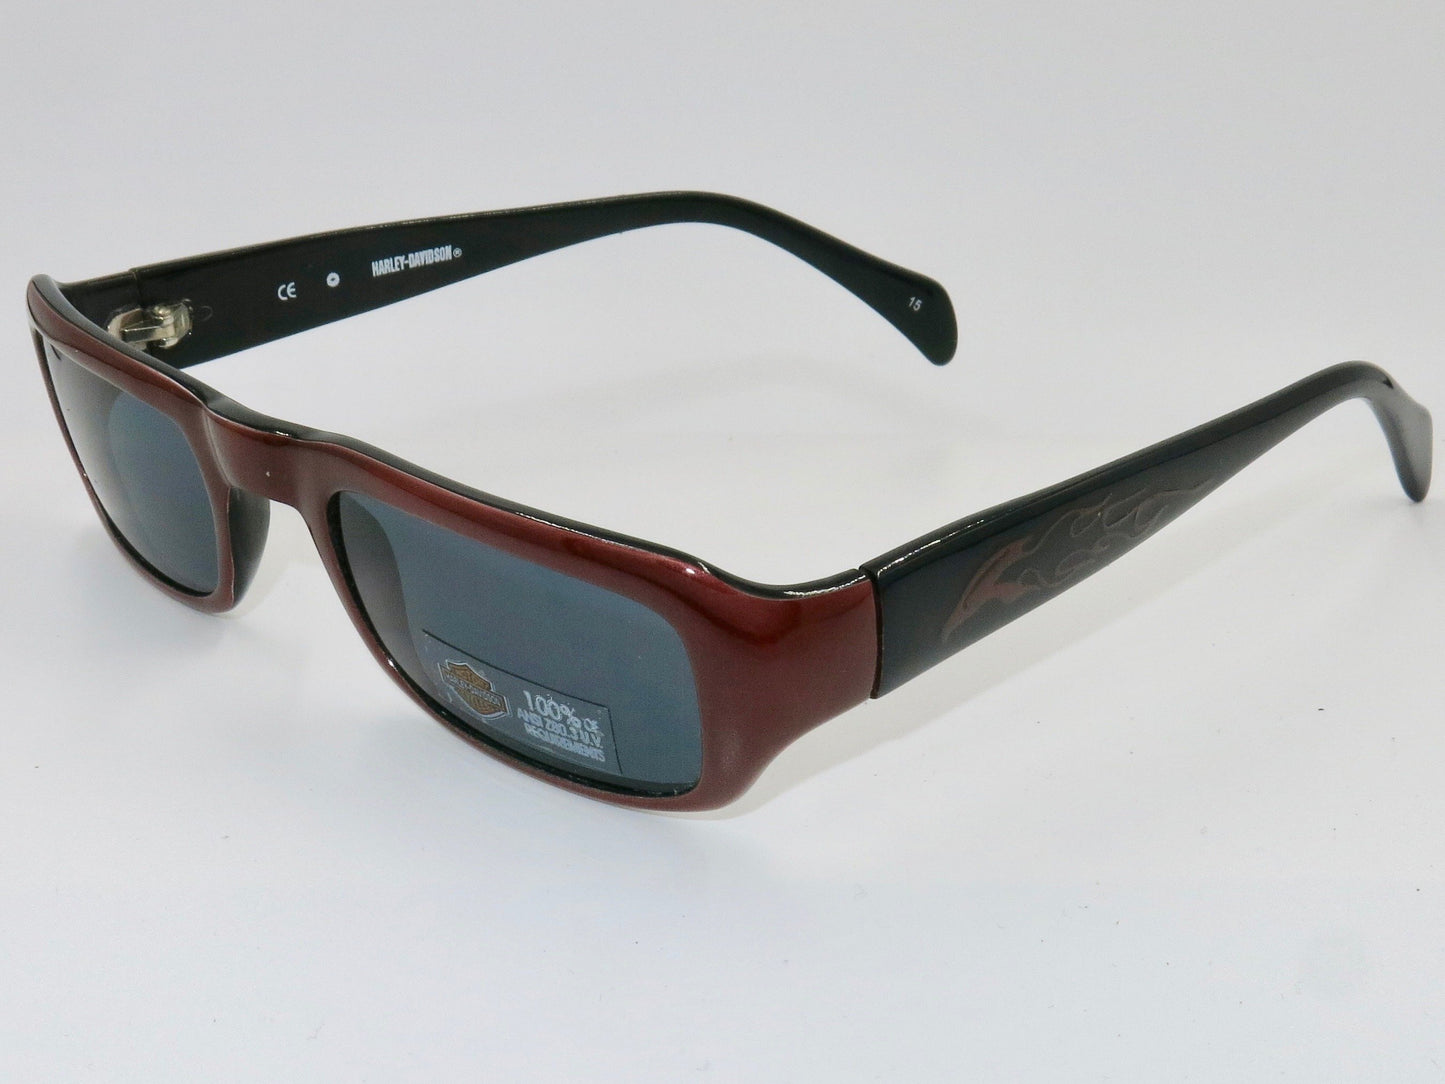 Harley Davidson Sunglasses - HDS 033